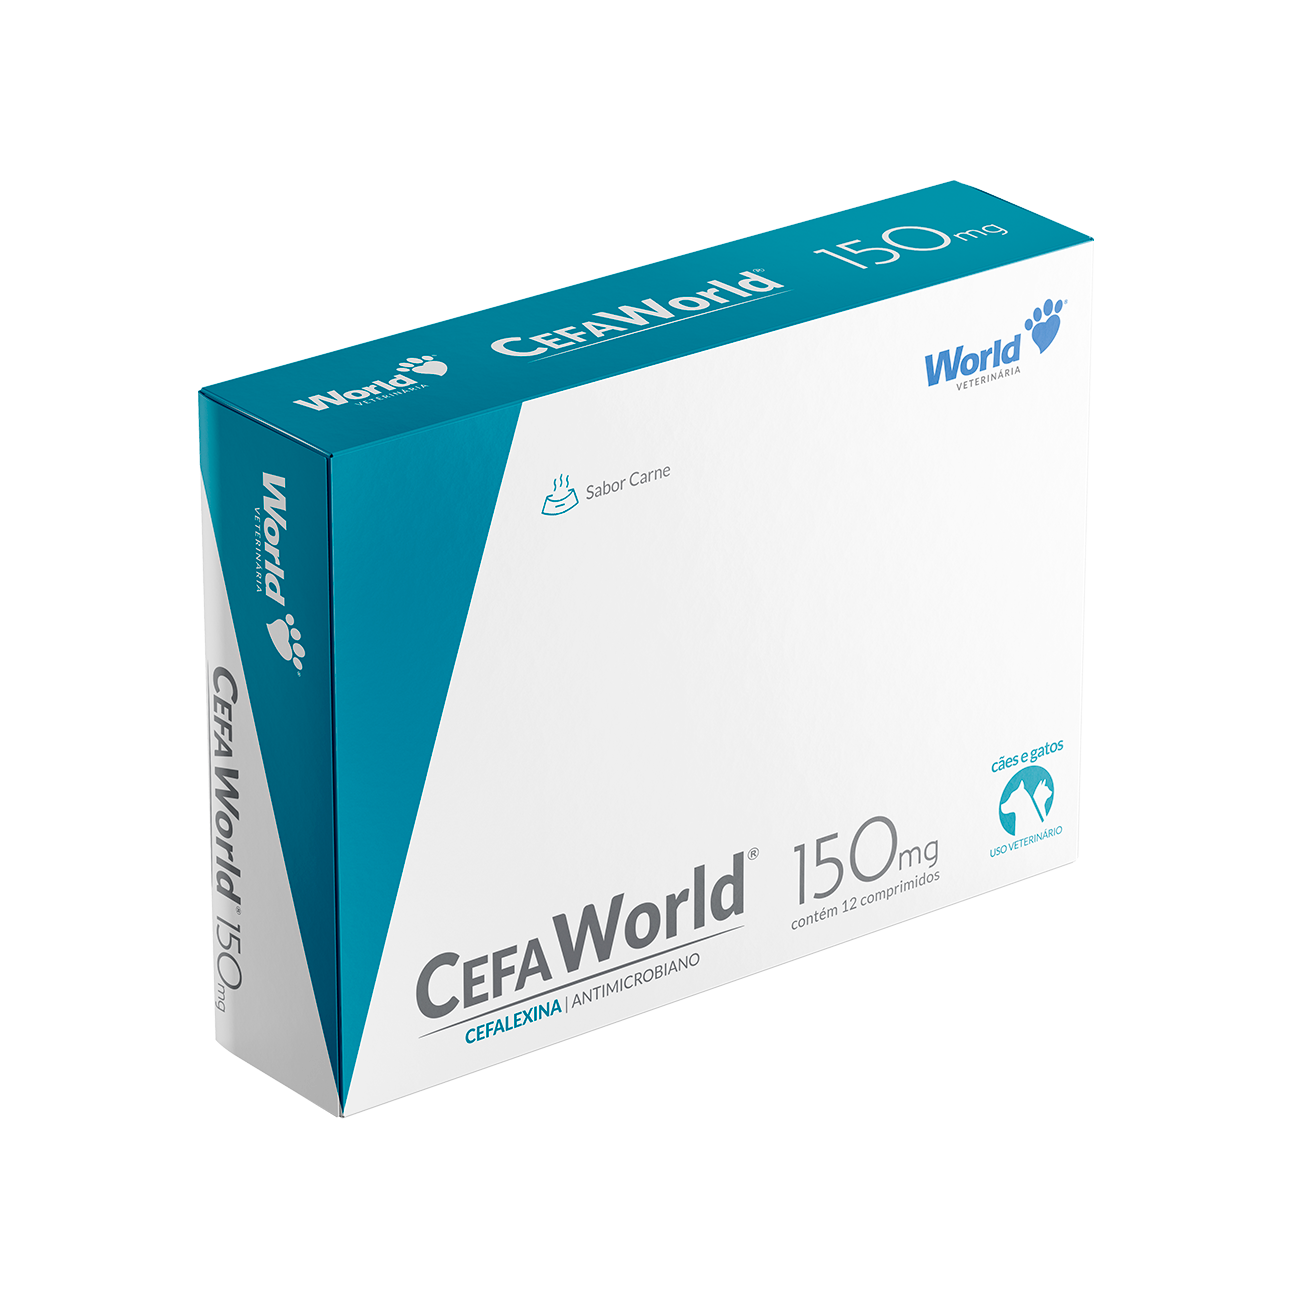 CefaWorld 150mg